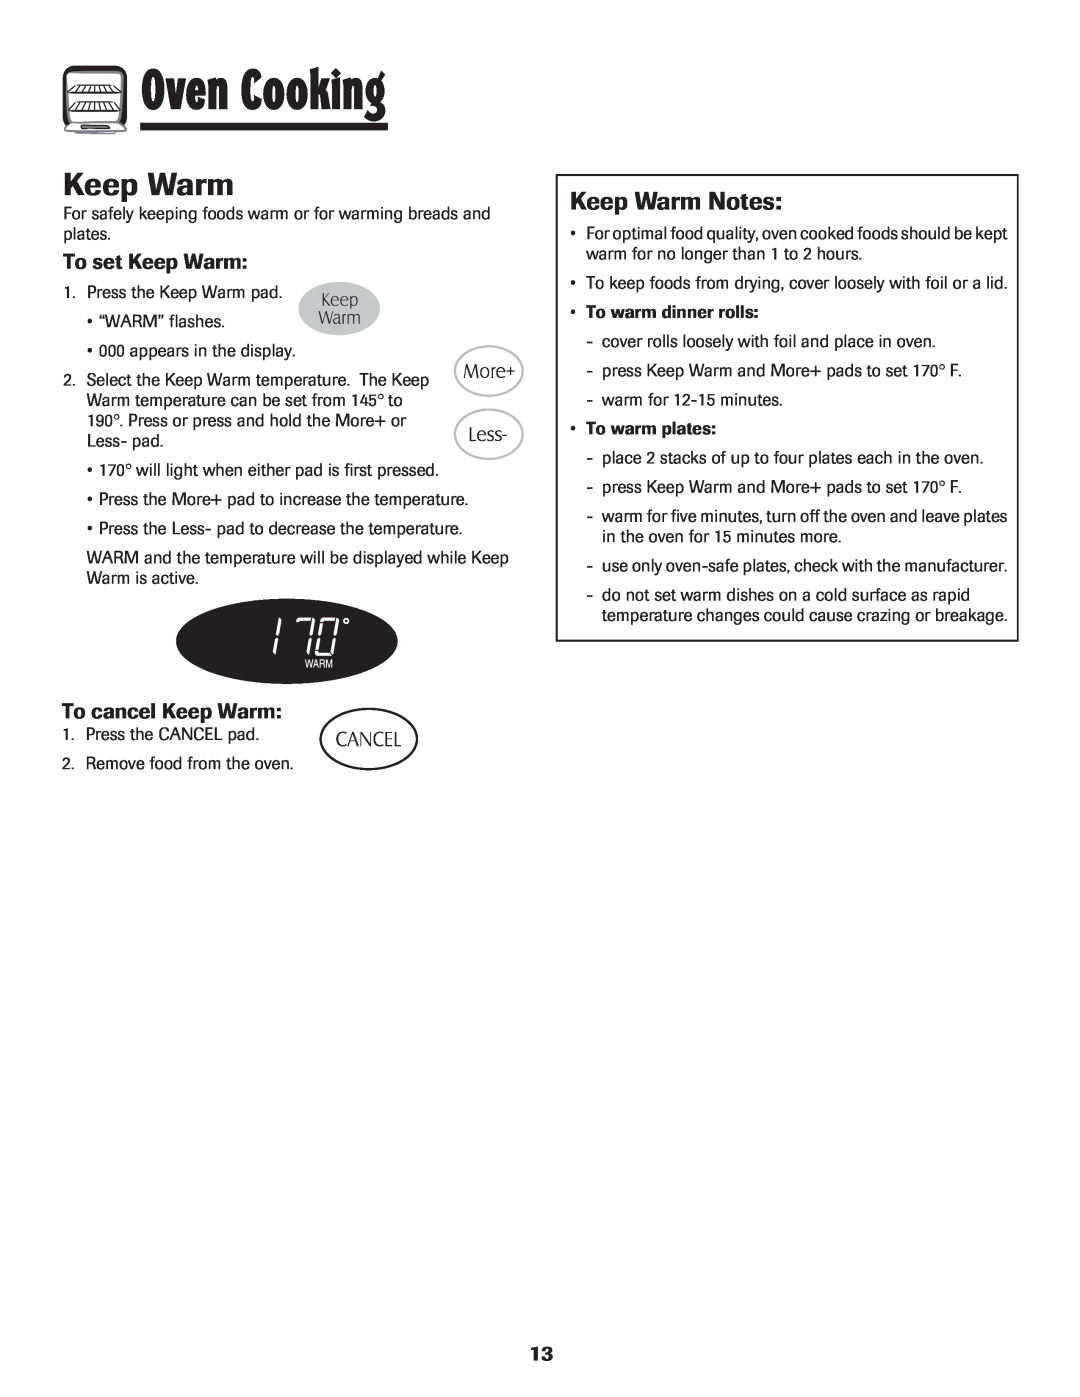 Maytag 8113P424-60 manual Keep Warm Notes, To set Keep Warm, To cancel Keep Warm, Oven Cooking 